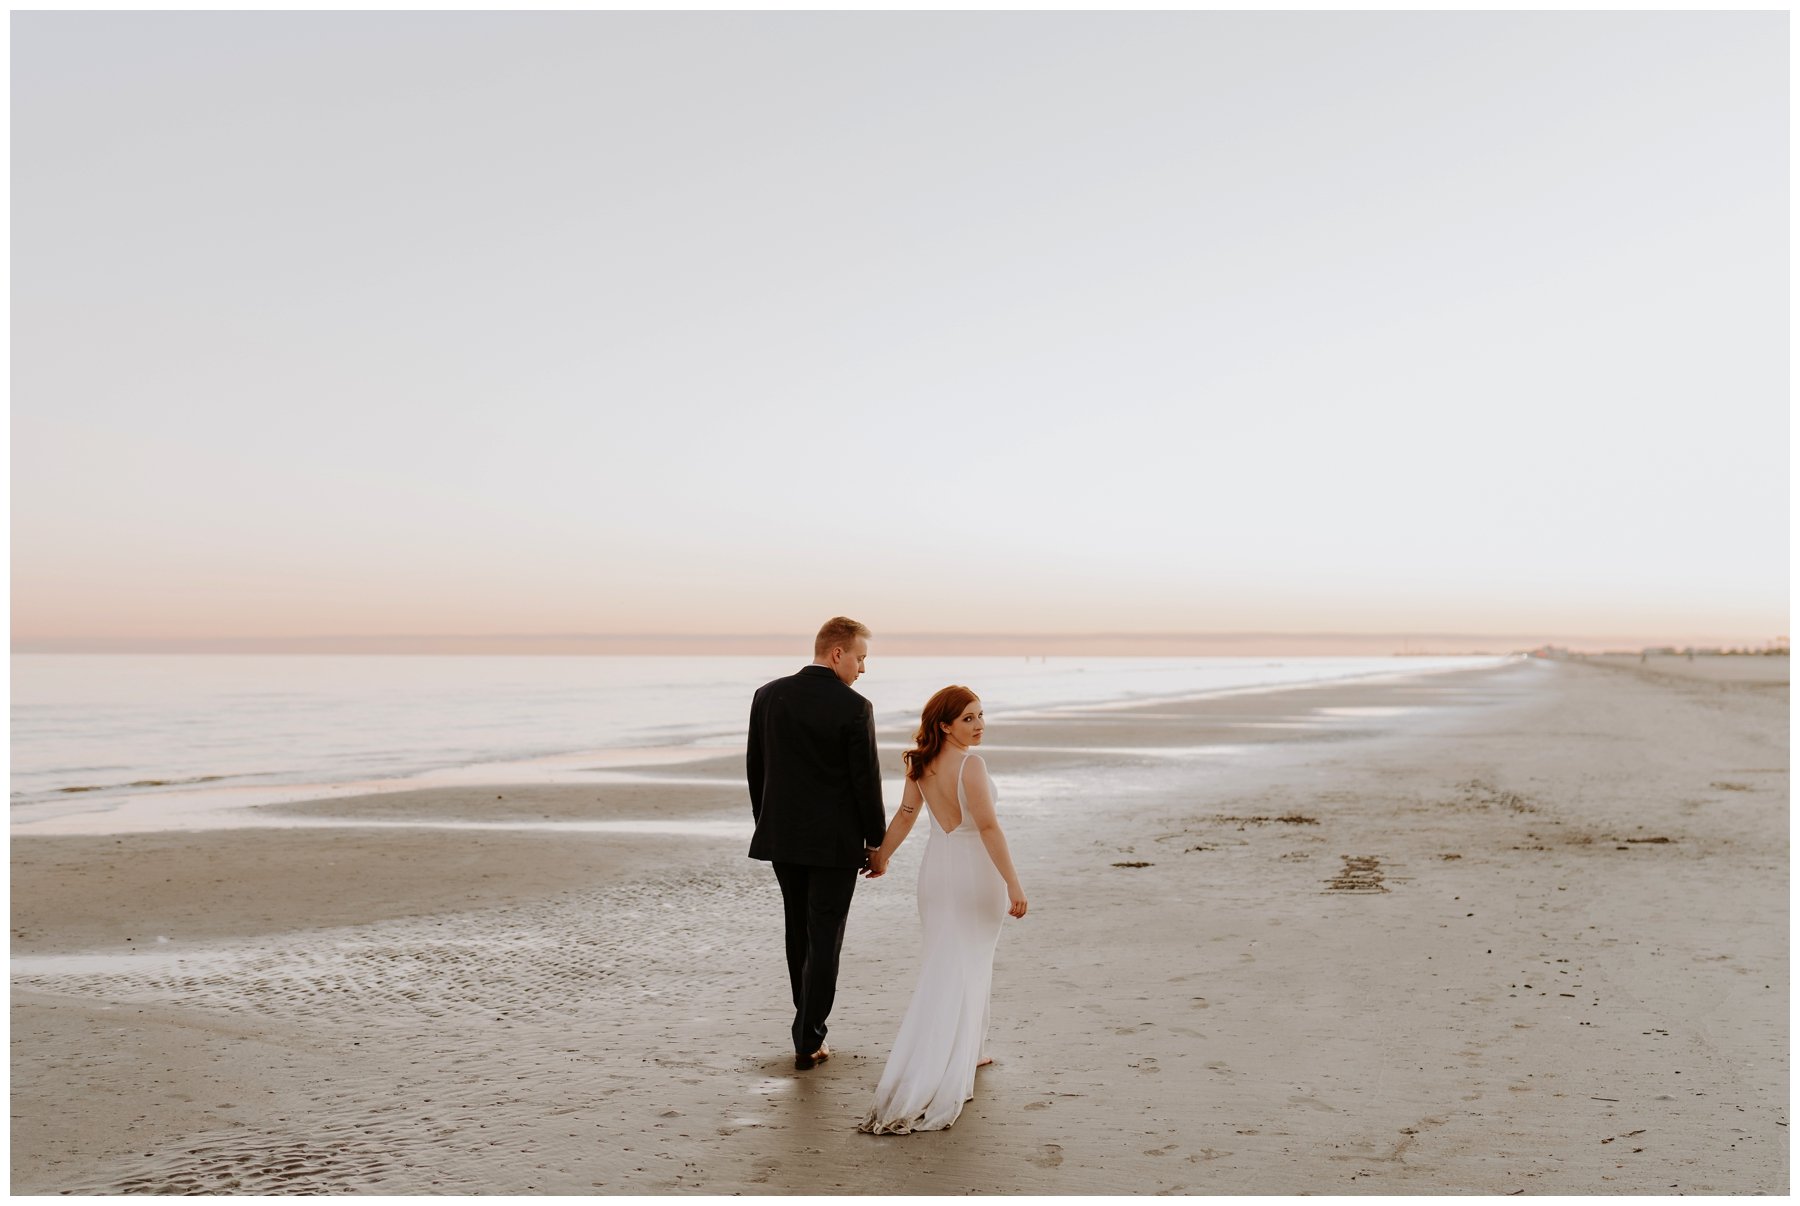 Romantic Sunset Portraits on the Beach | Ashley Medrano Photography | Galveston Texas Beach Elopement | via ashleymedrano.com